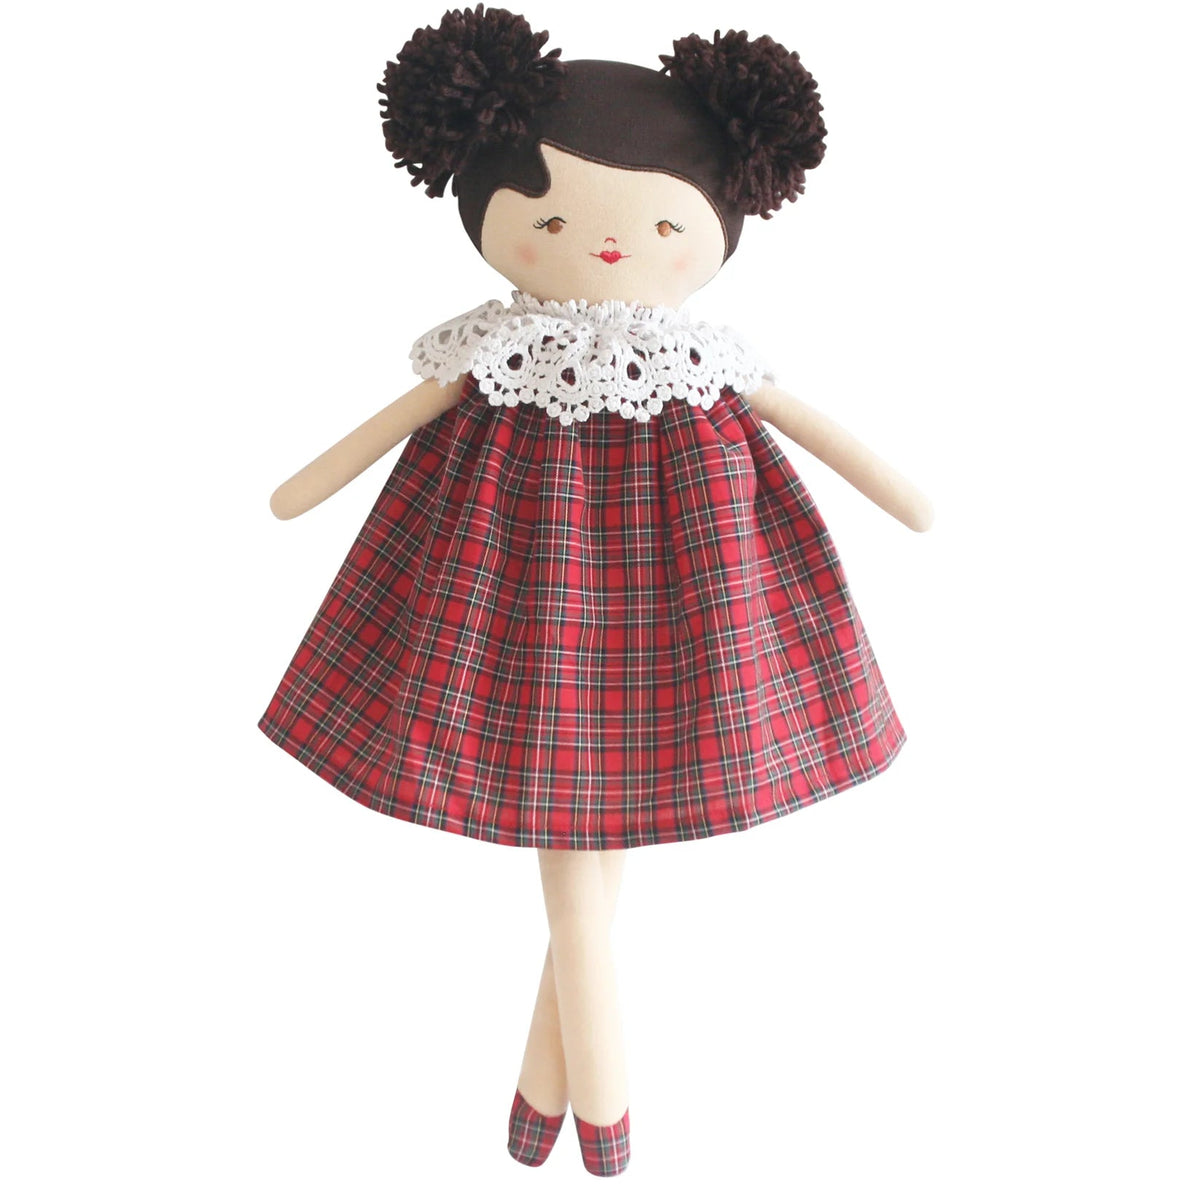 Aggie Doll by Alimrose - Maude Kids Decor